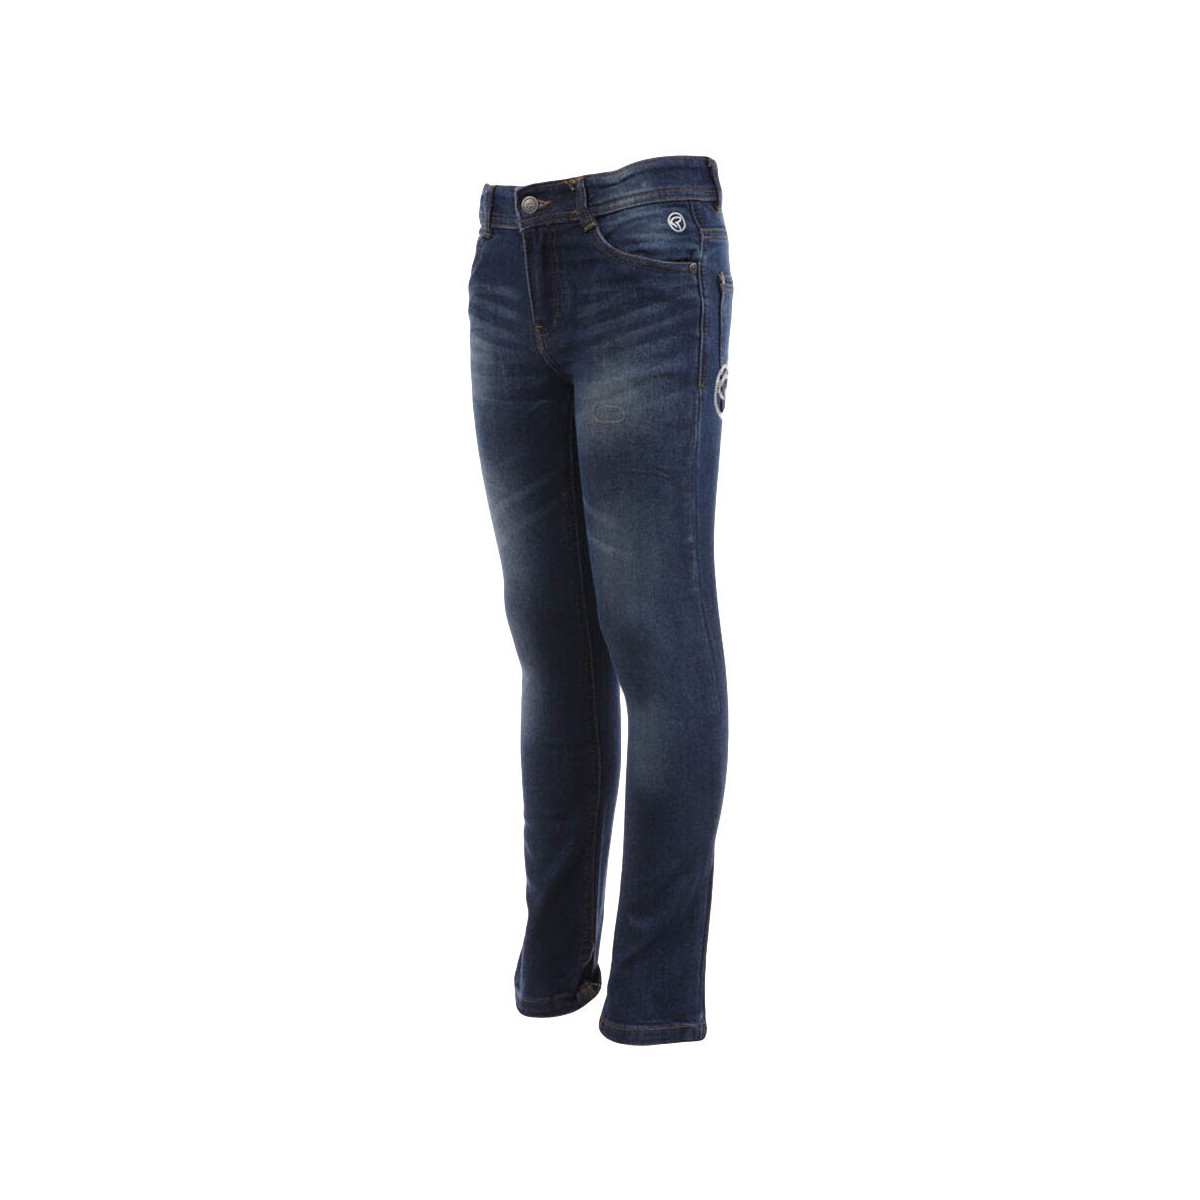 Vêtements Garçon Jeans droit Redskins RDS-4567-JR Bleu